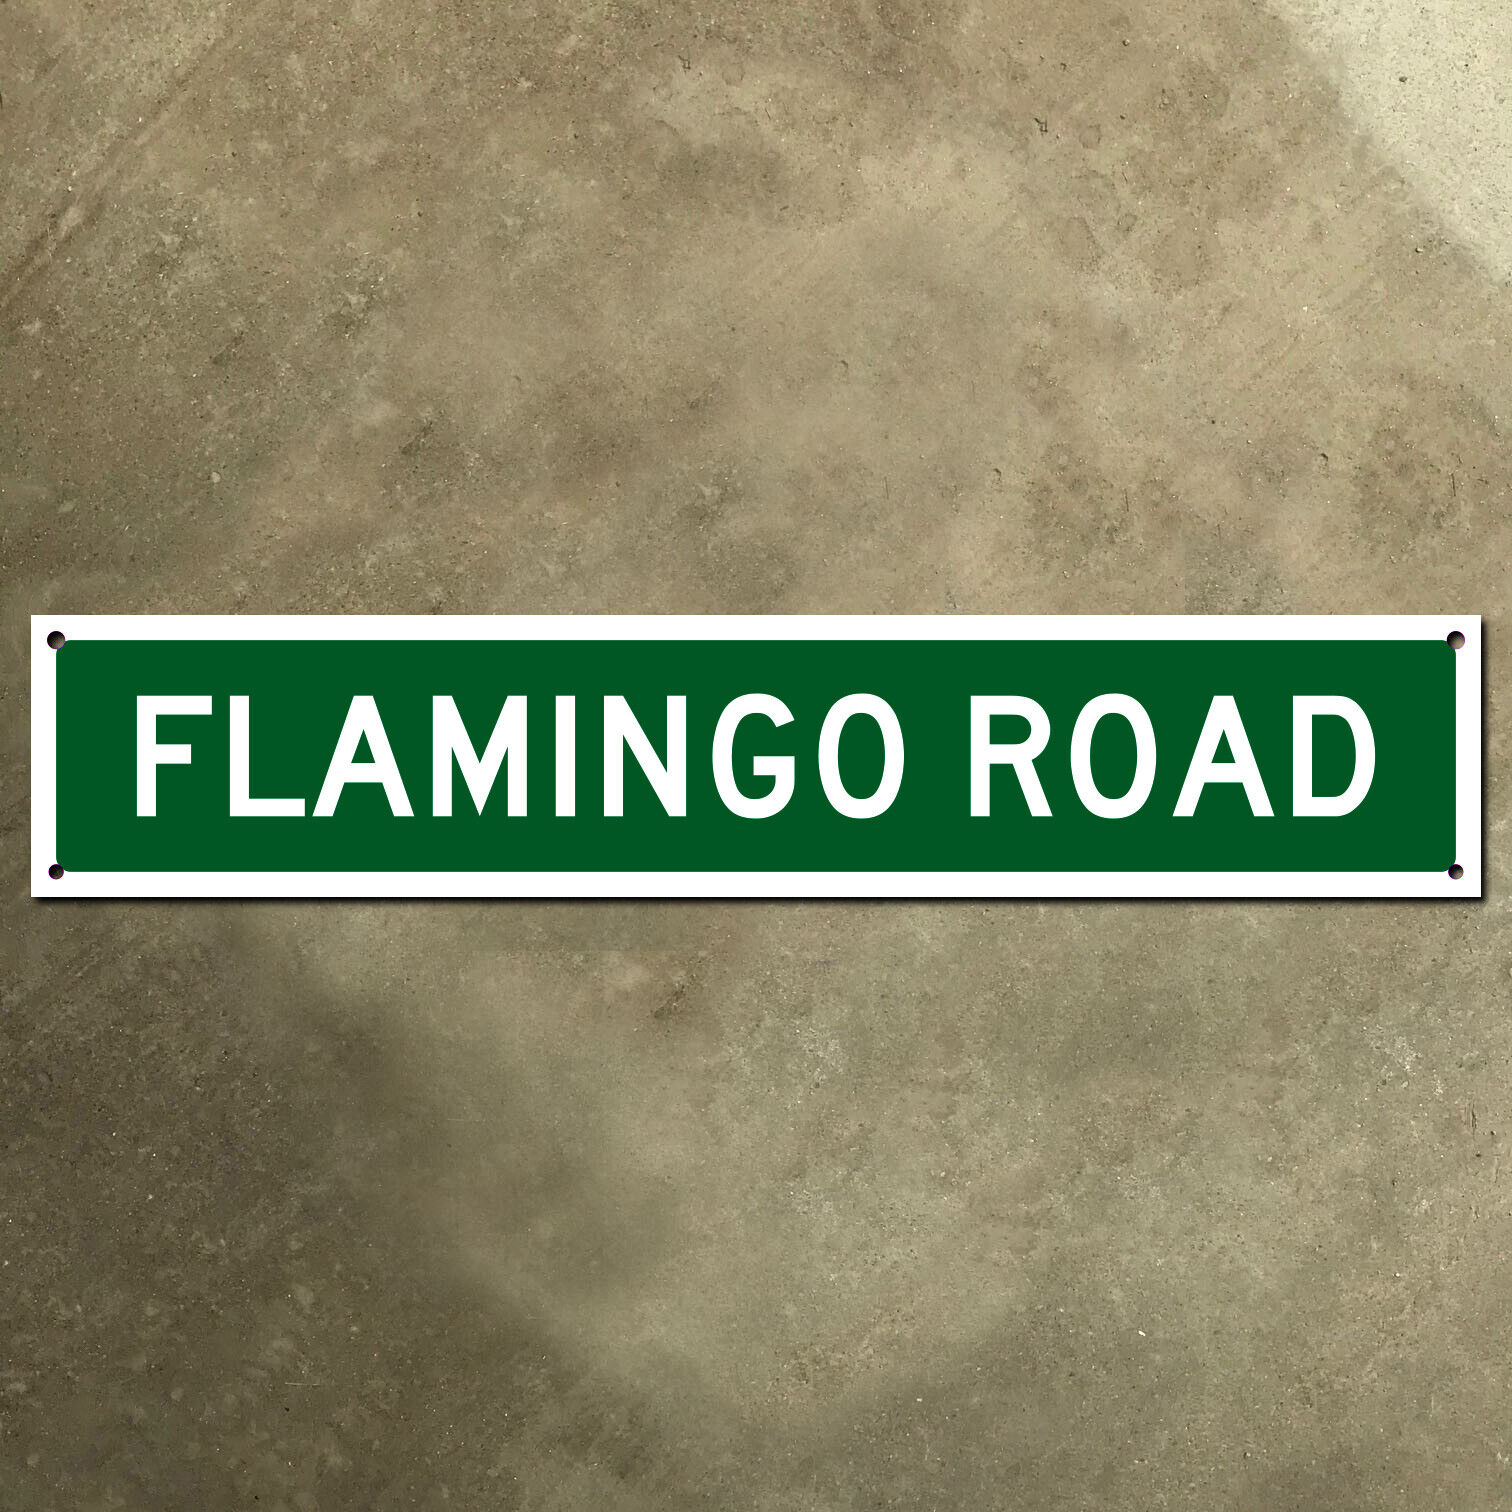 Flamingo Road Las Vegas Nevada street blade road sign 1963 36x7 Casino Rat Pack